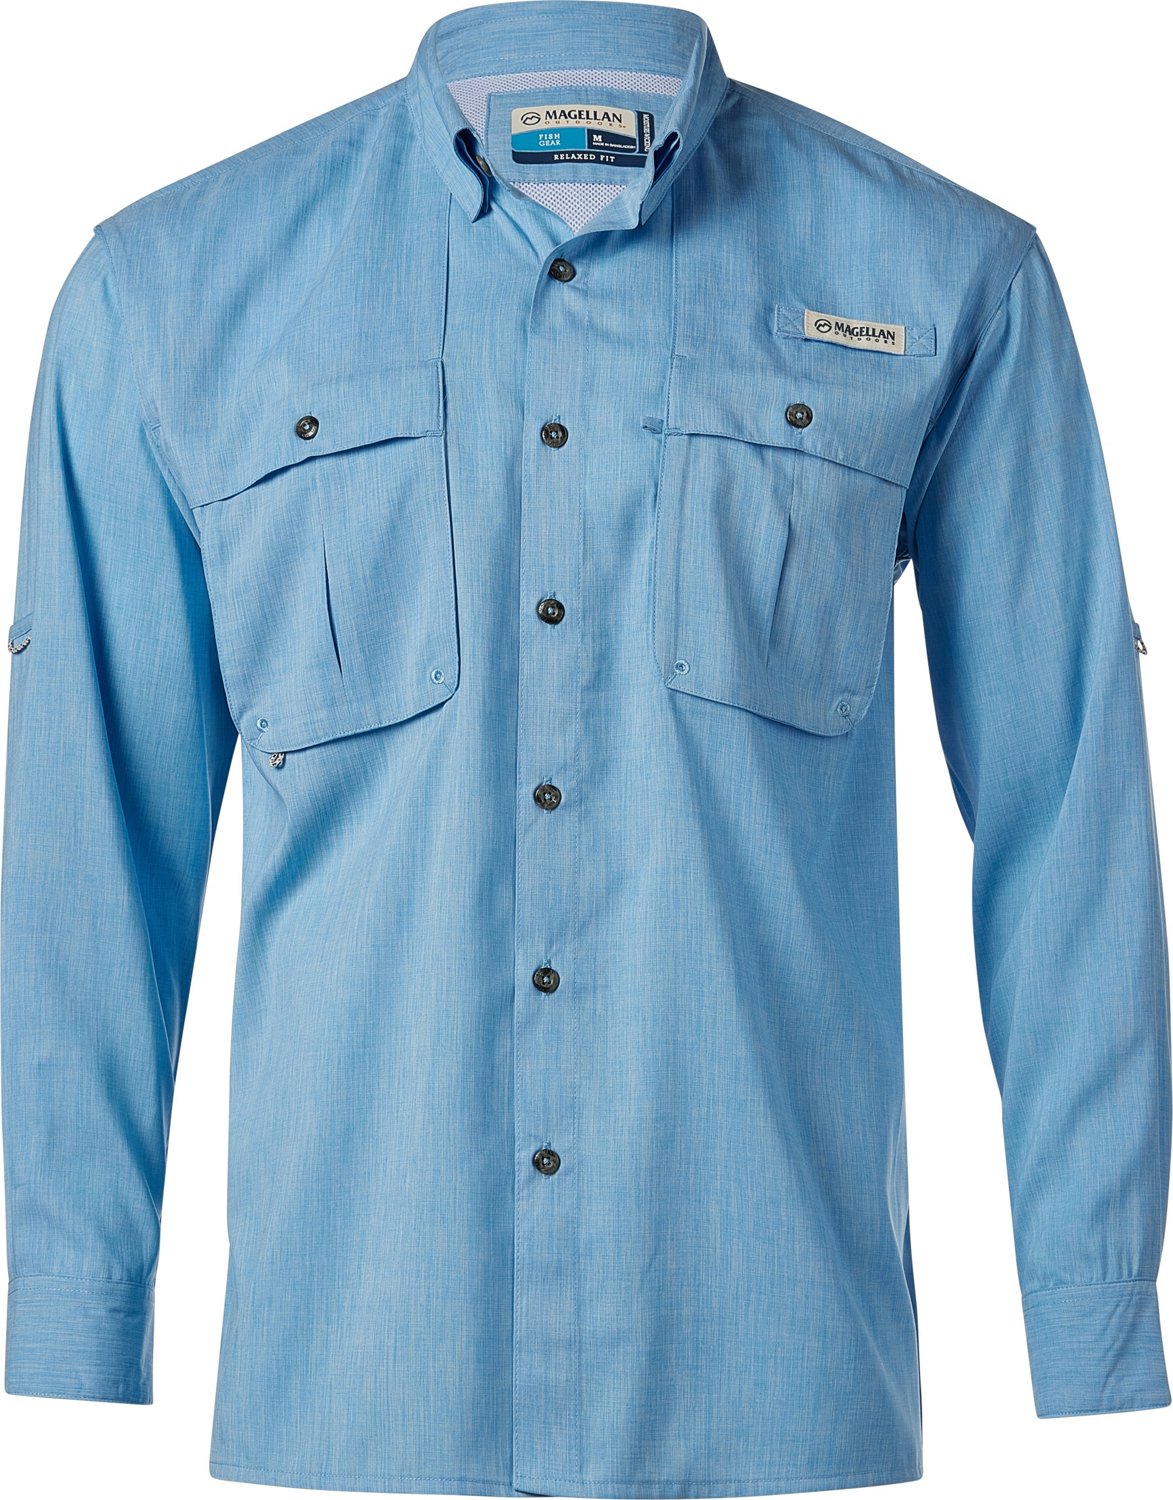 Magellan Outdoors Men's Pro Angler Long Sleeve T-Shirt